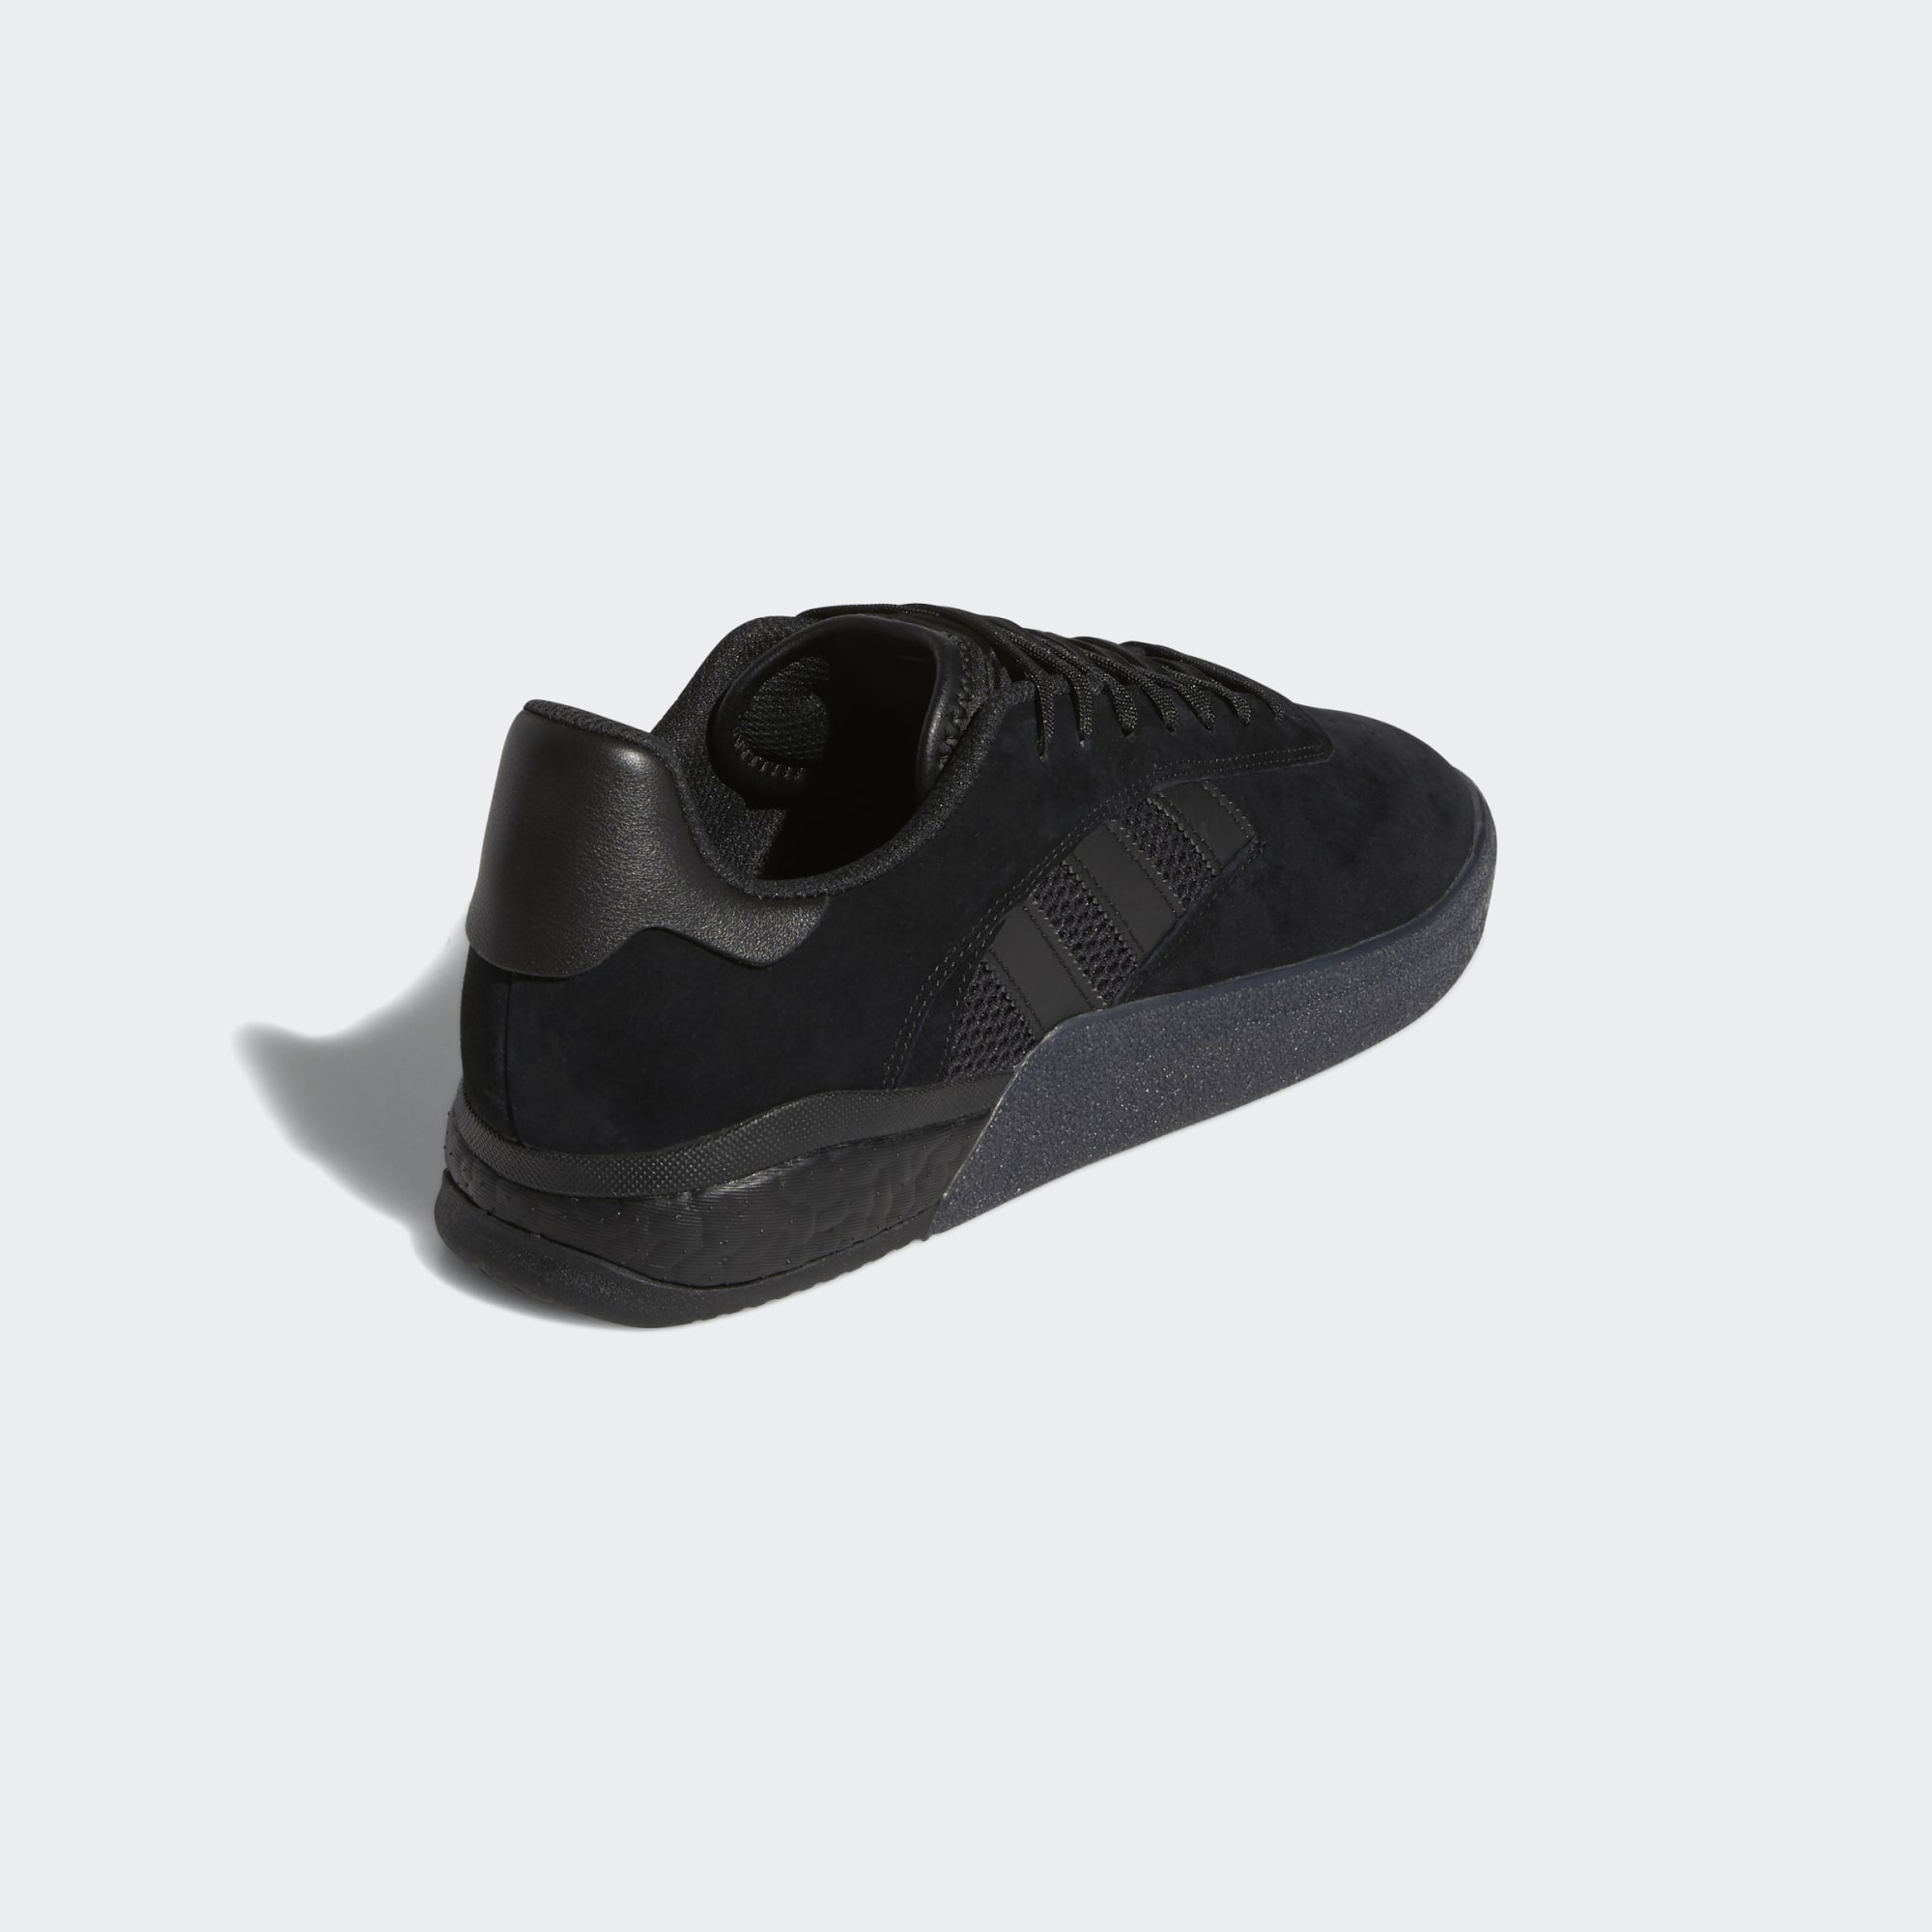 Adidas 3ST.004 schoenen core black / core black / core black